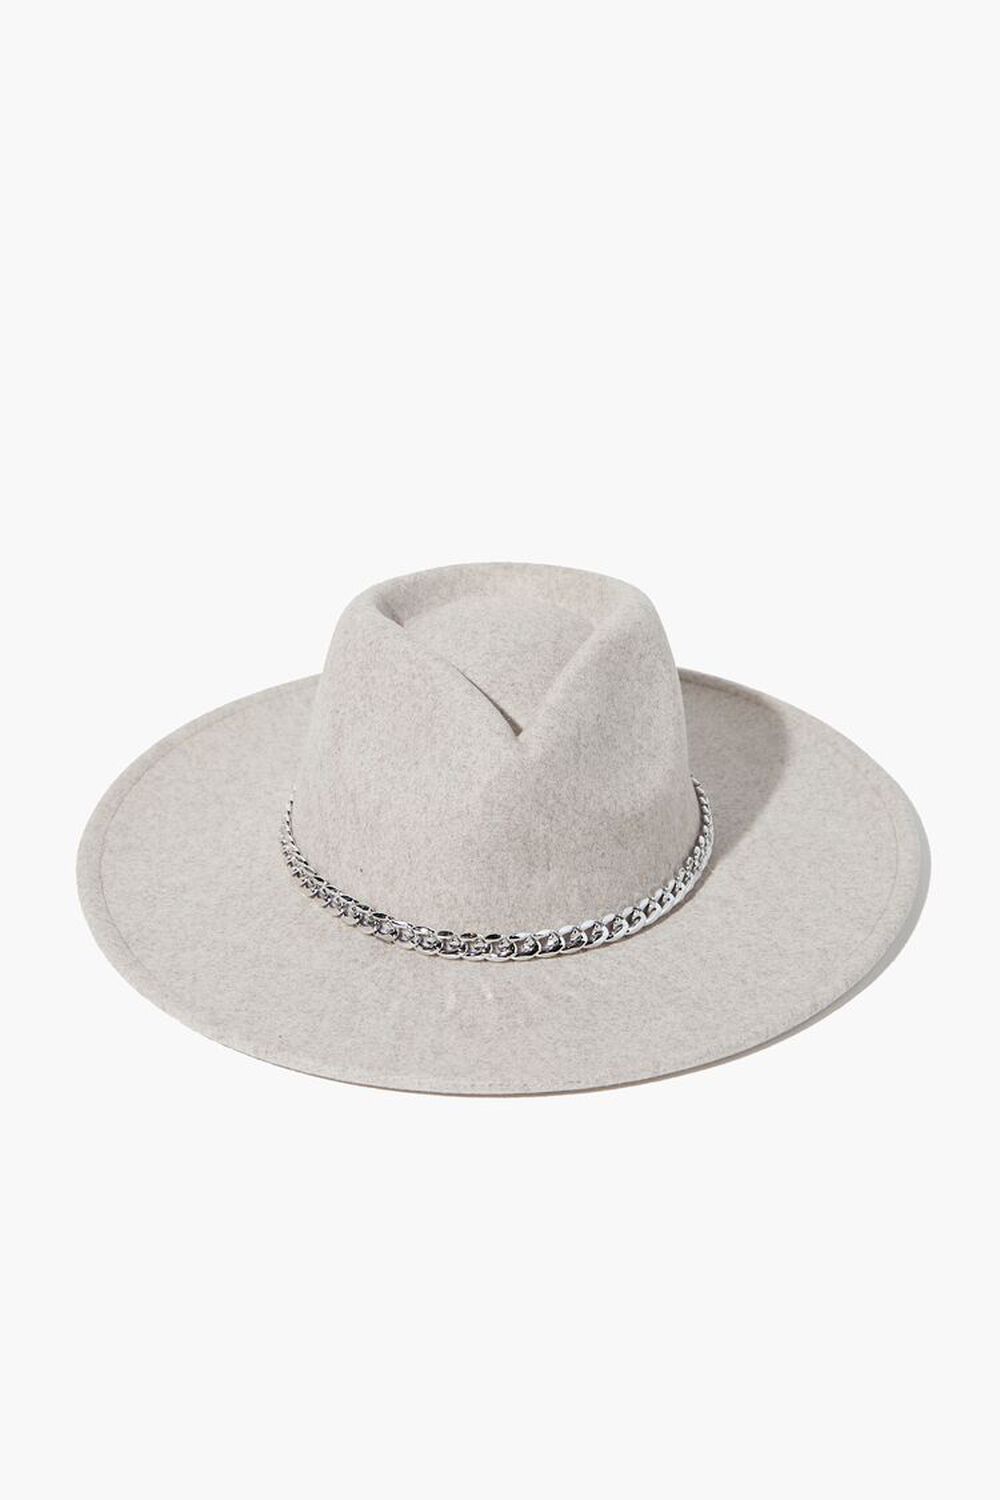 OATMEAL/SILVER Chain-Trim Sun Hat, image 1